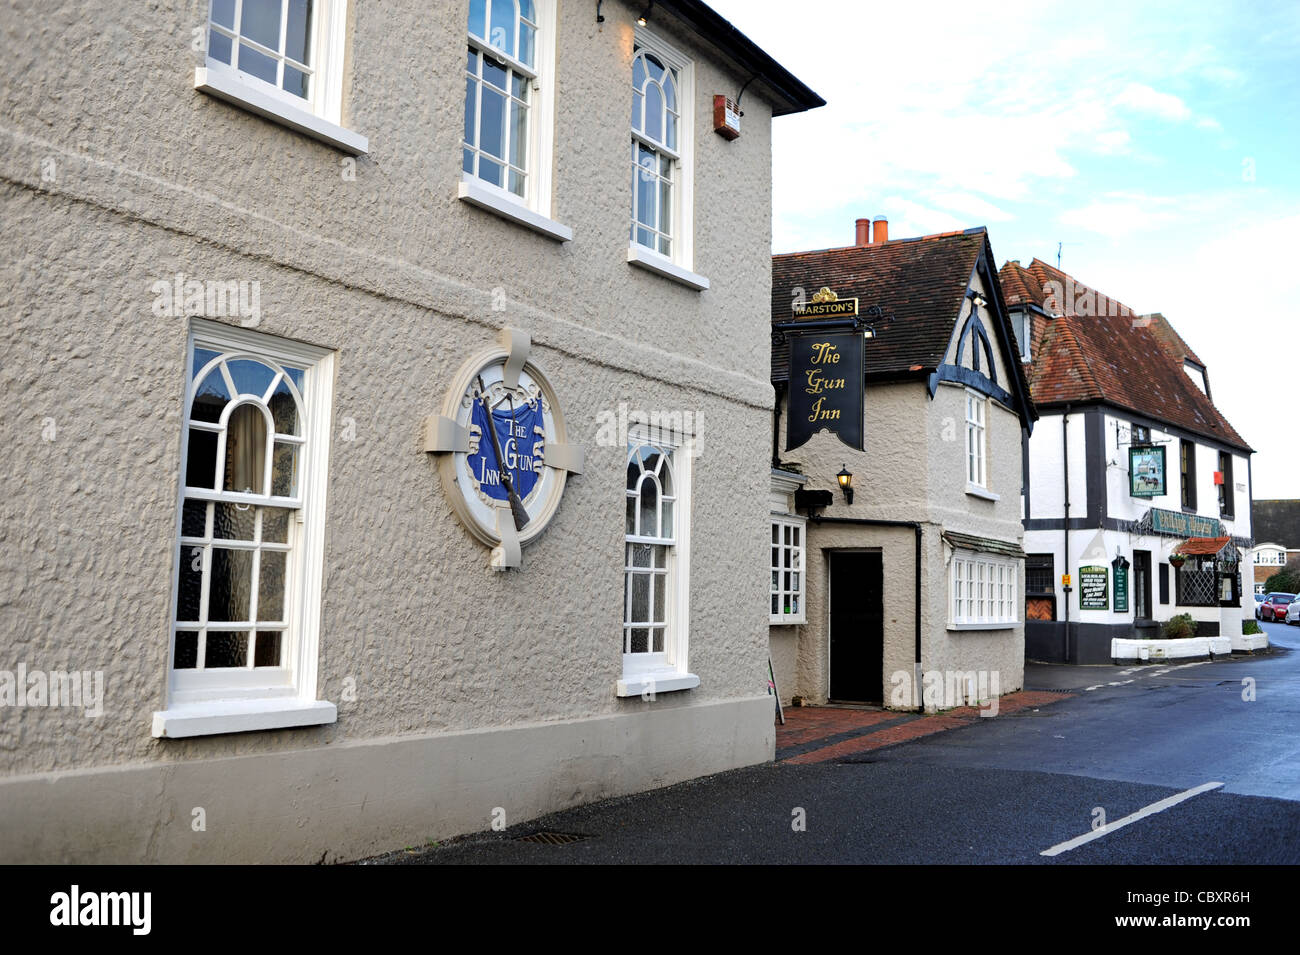 The famous Gun Inn pub at Findon village West Sussex UK Stock Photo